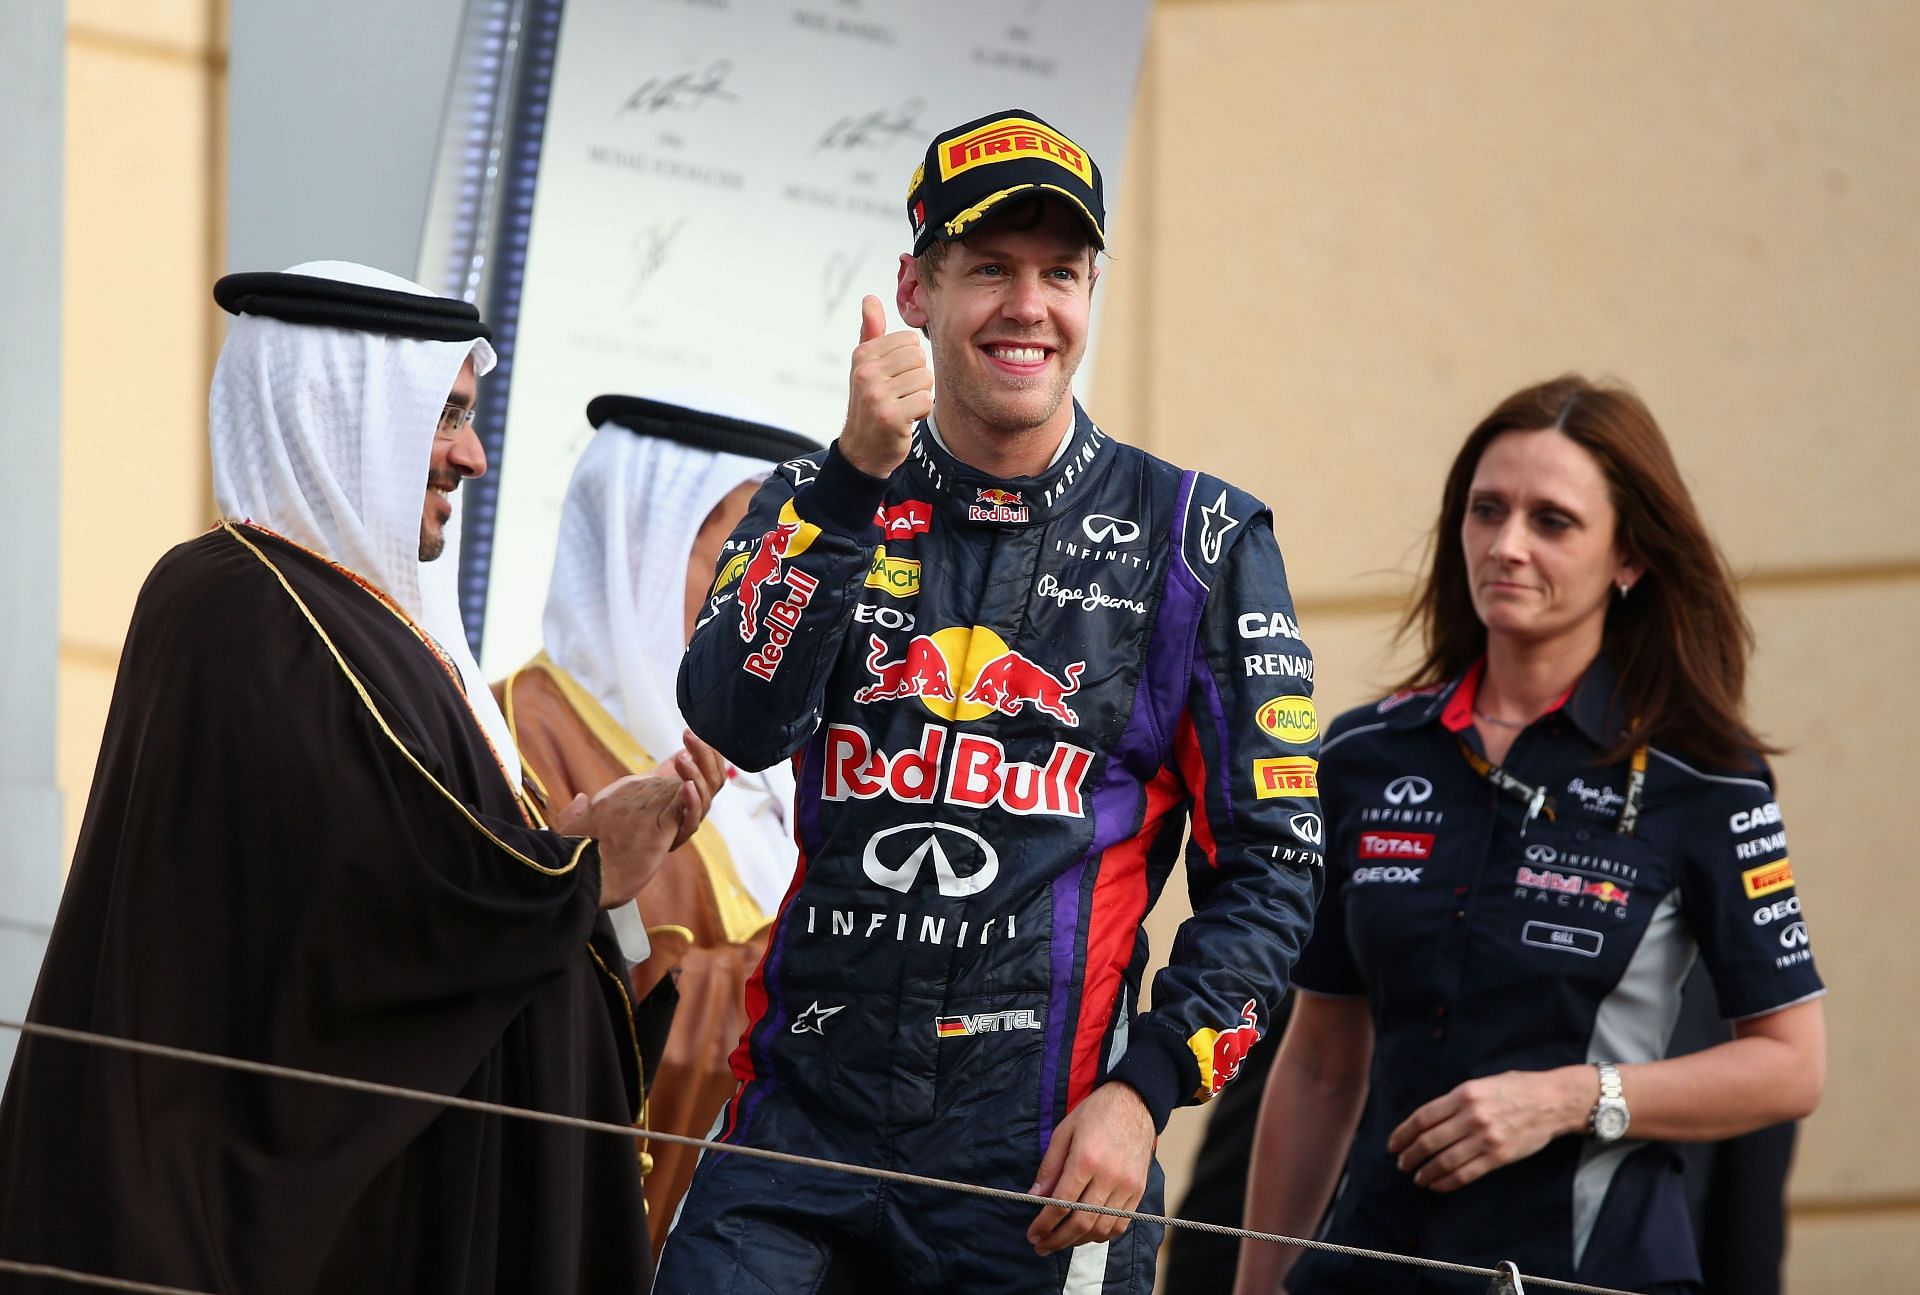 Sebastian Vettel celebrates on the podium alongside Gill Jones after winning the Bahrain Formula One Grand Prix at the Bahrain International Circuit on April 21, 2013, in Sakhir, Bahrain (Photo by Clive Mason/Getty Images)